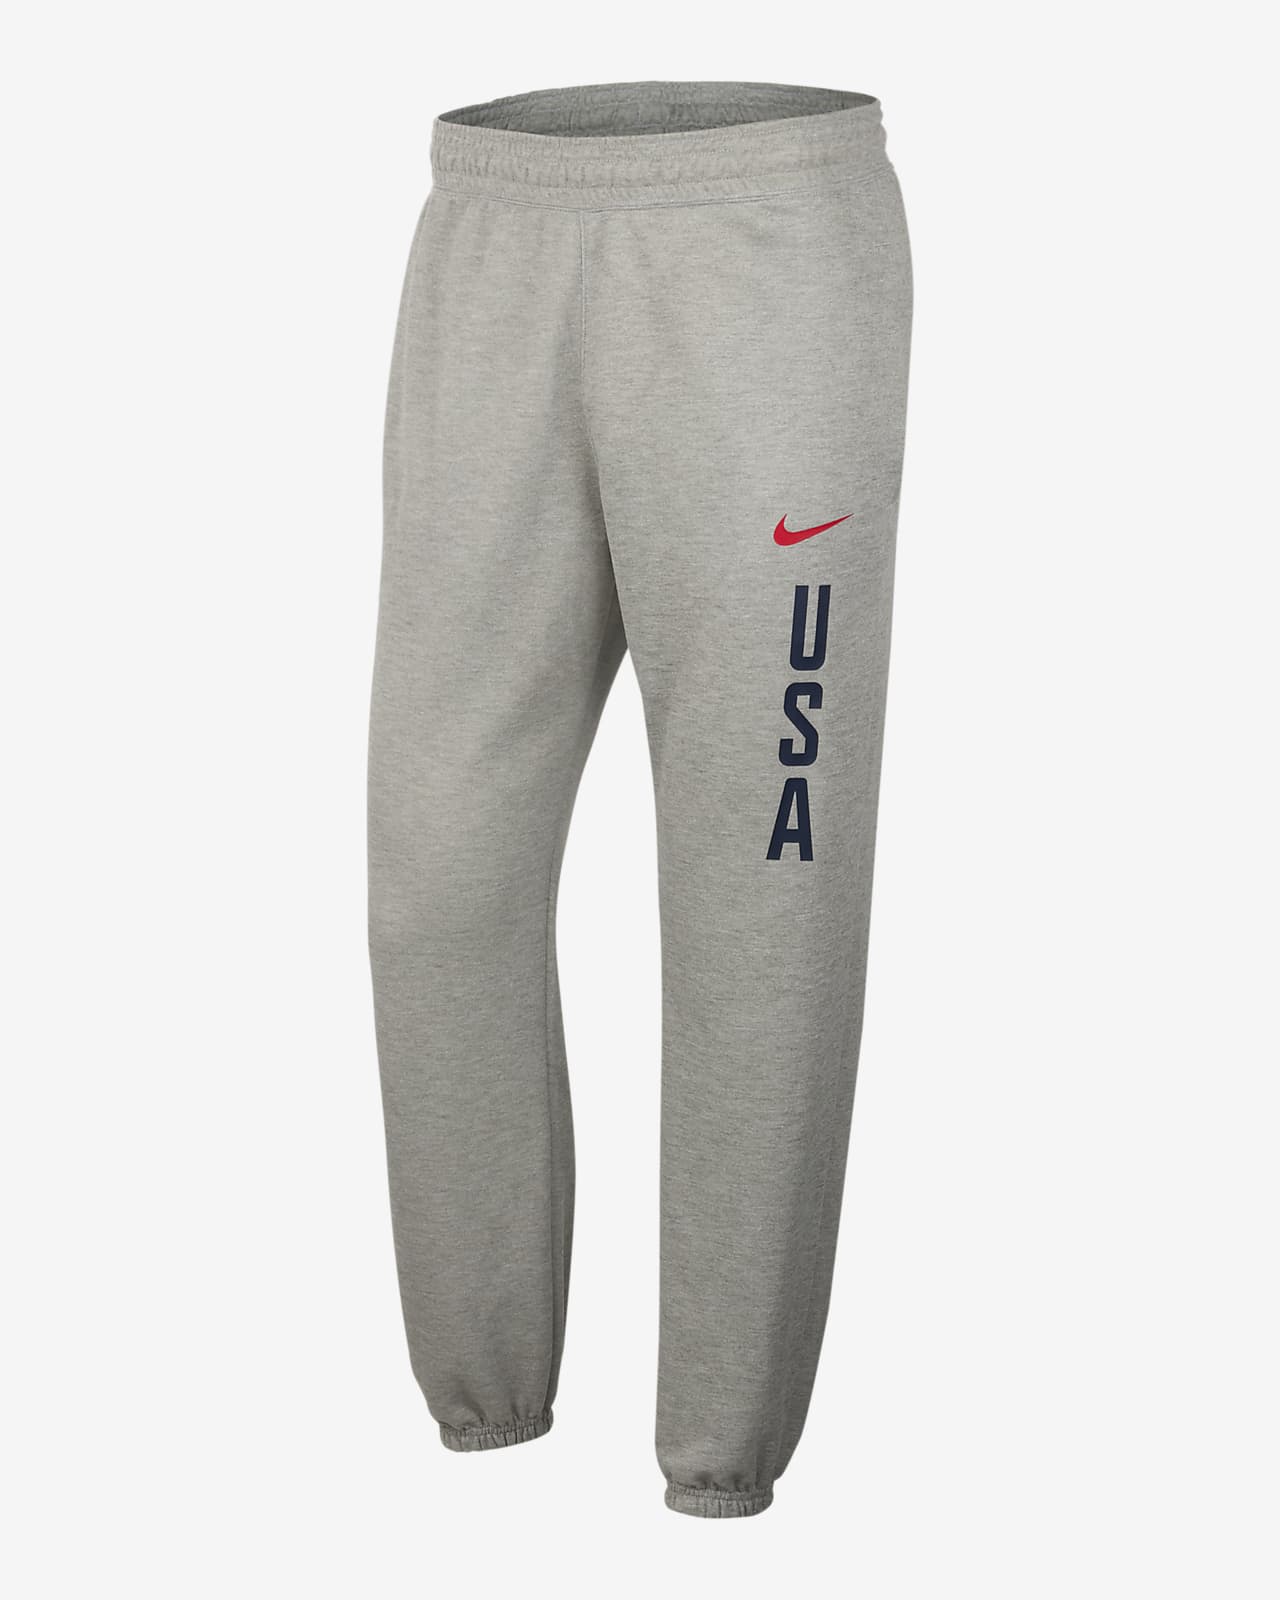 USA Practice Men's Nike Basketball Fleece Trousers